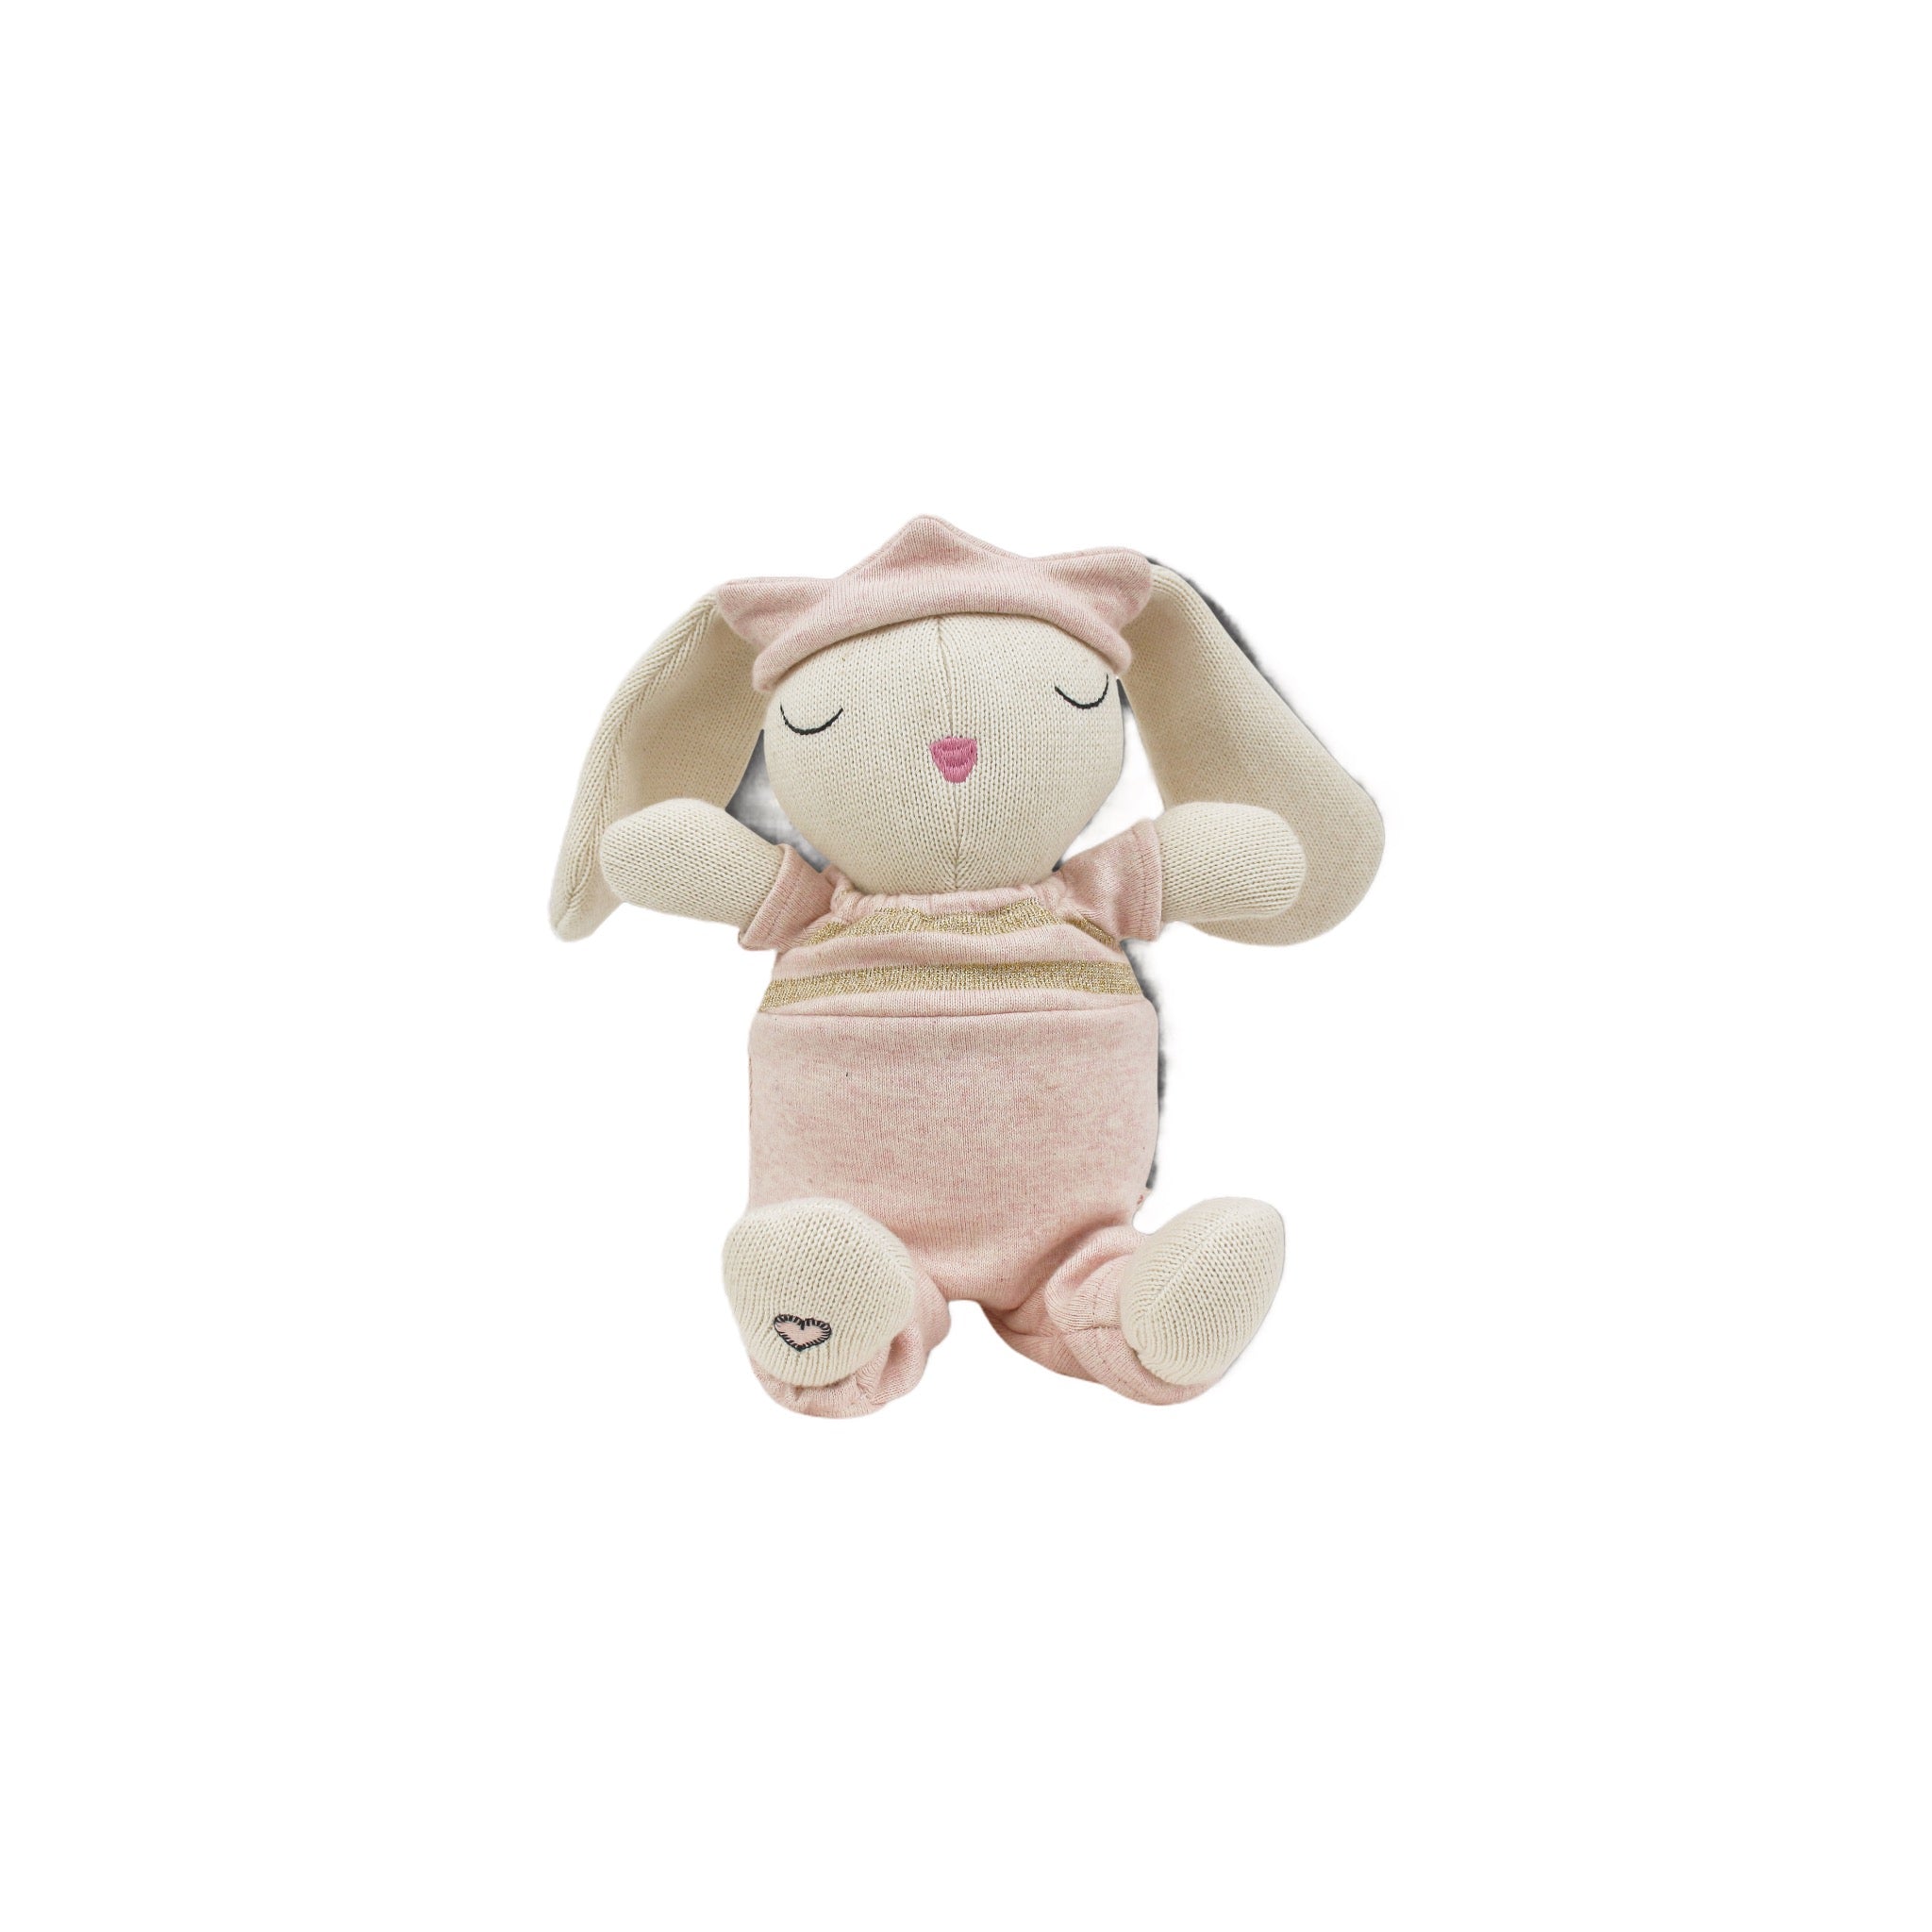 Bunny Floppy Ears - Pink